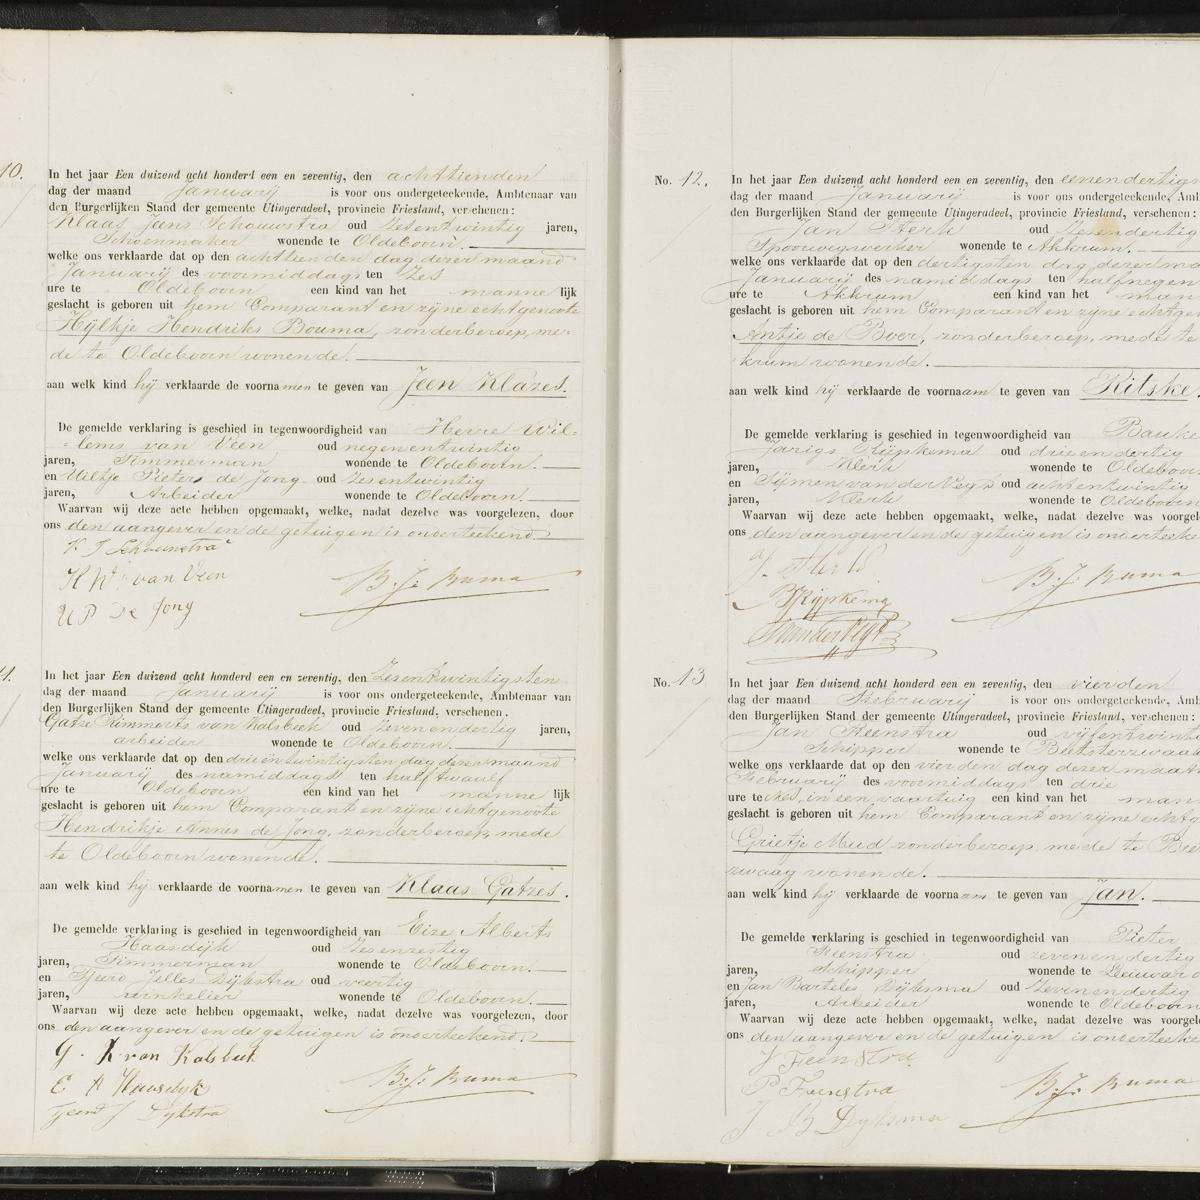 Civil registry of births, Uteringadeel, 1871, records 10-13